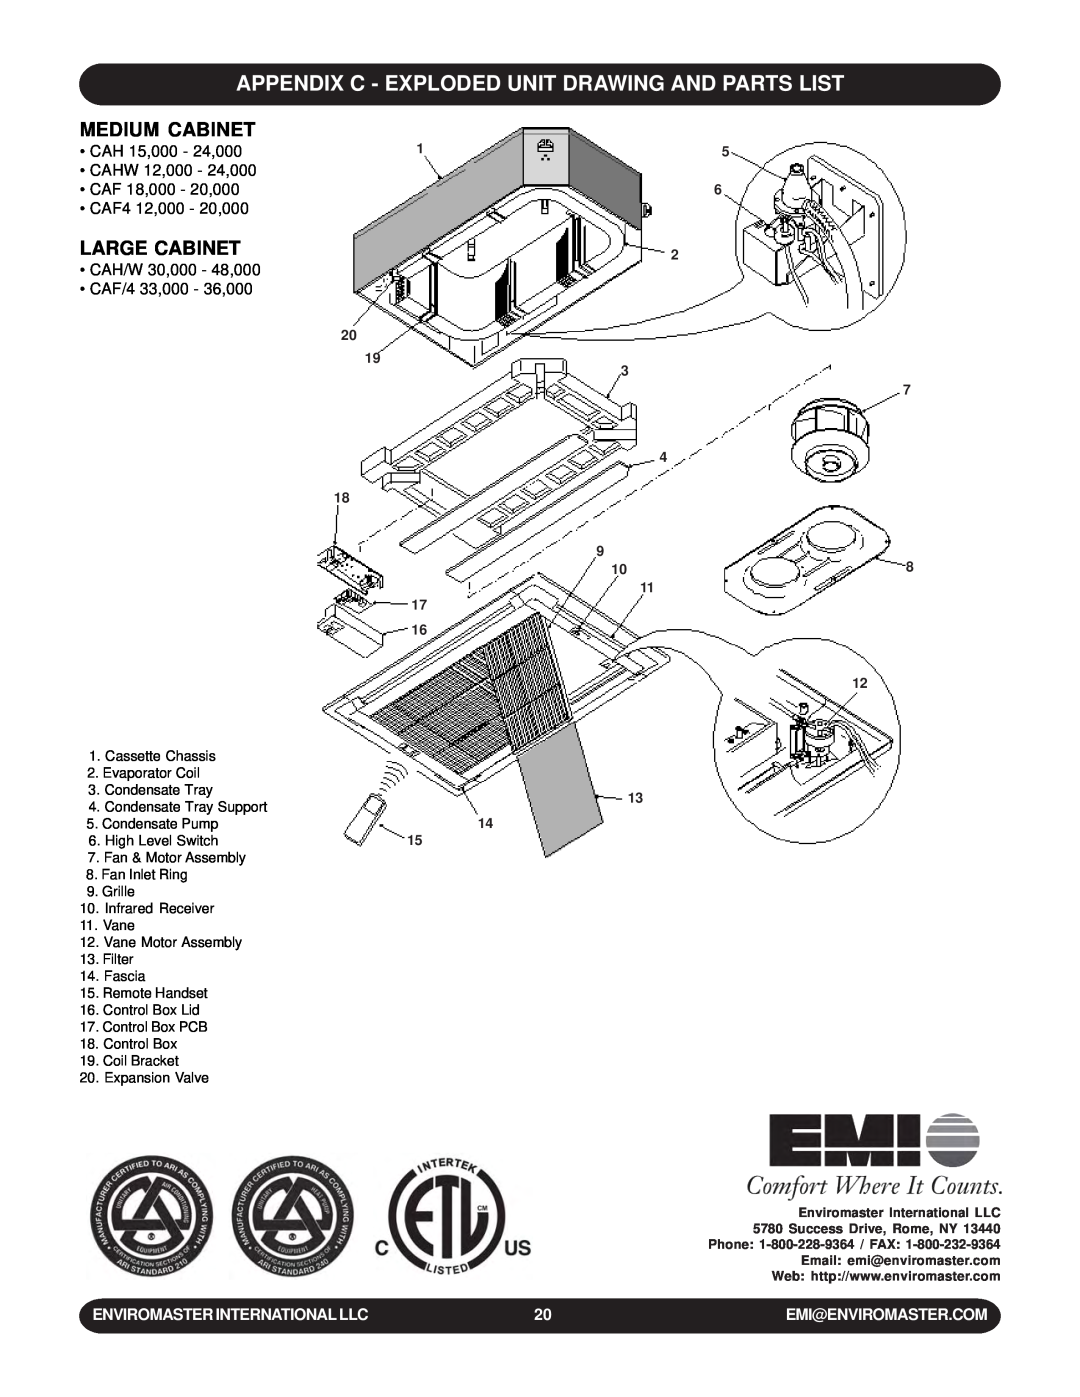 EMI WLCA Appendix C - Exploded Unit Drawing And Parts List, Medium Cabinet, Large Cabinet, CAH 15,000 - 24,000 